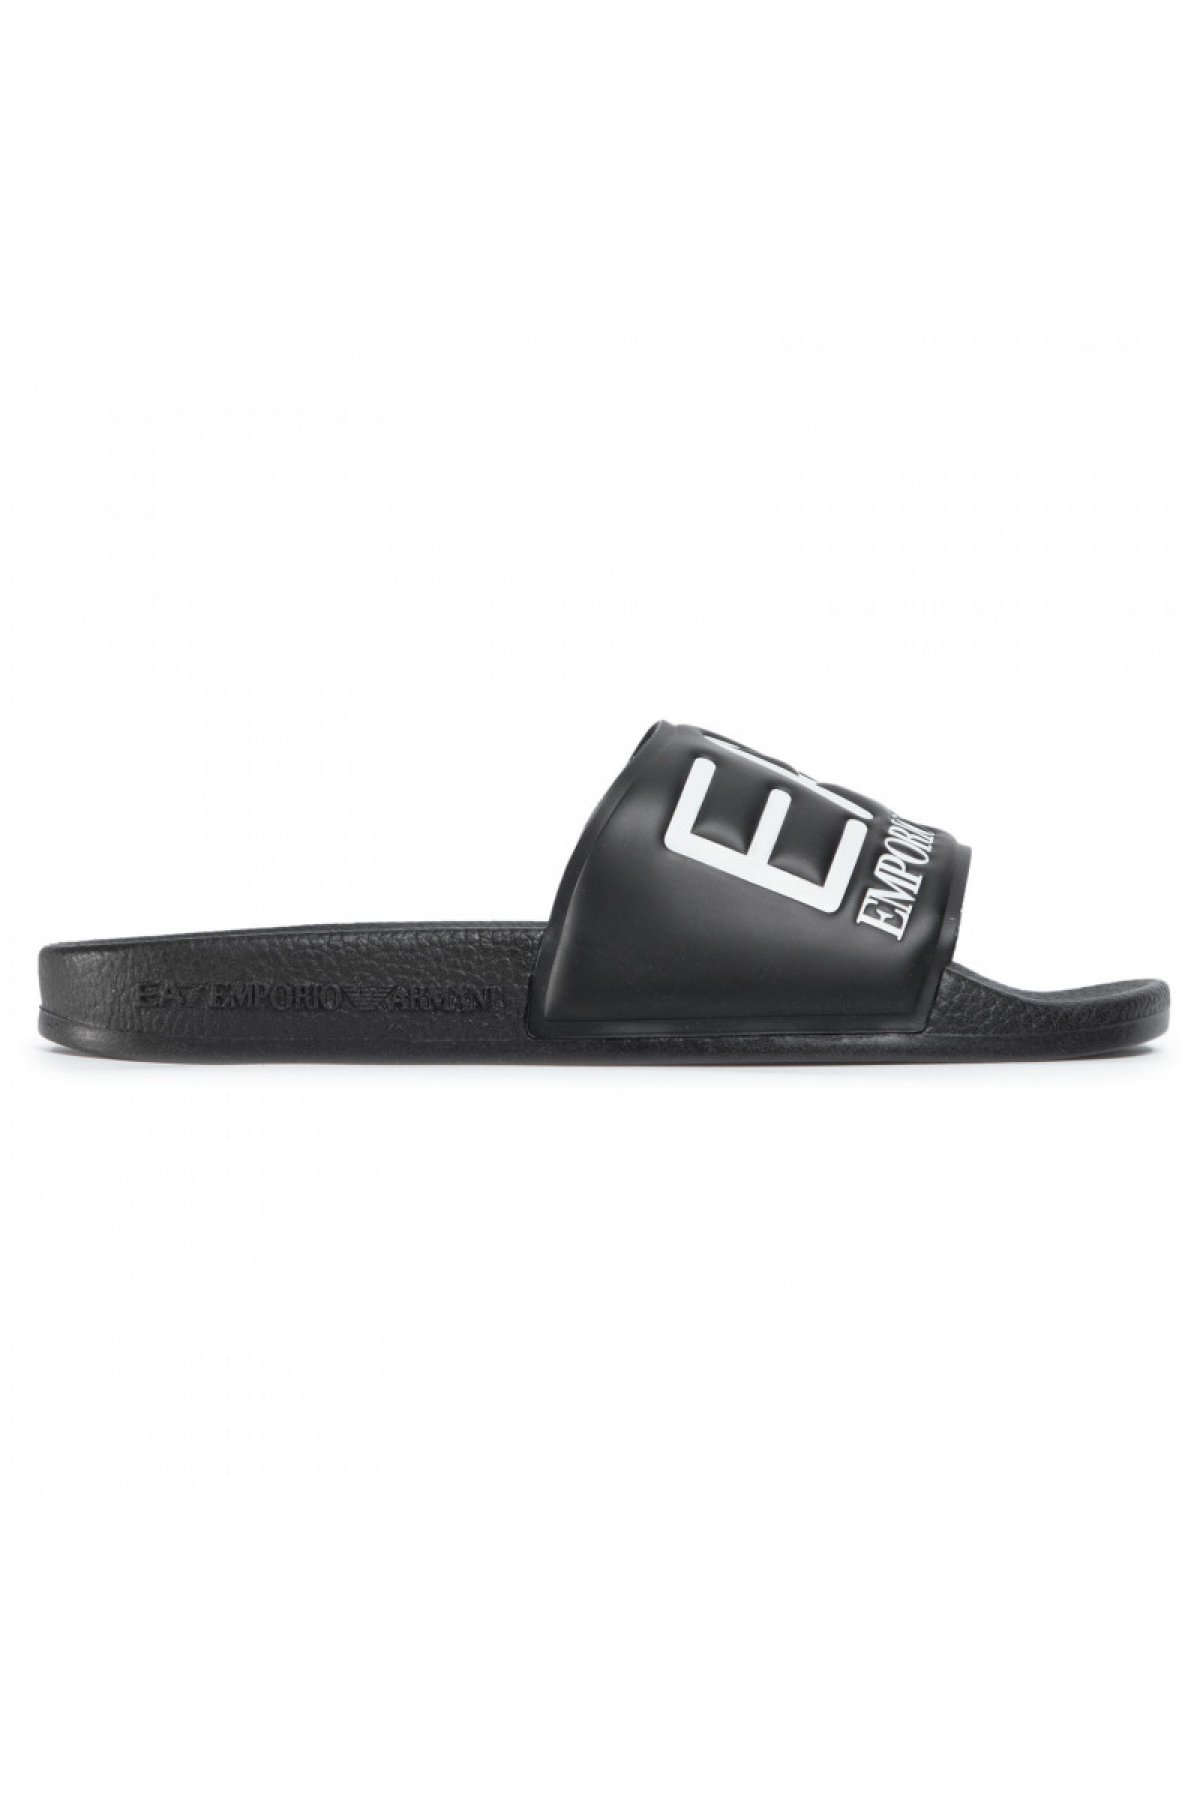 Emporio Armani XCP001 XCC22 pantofle černé